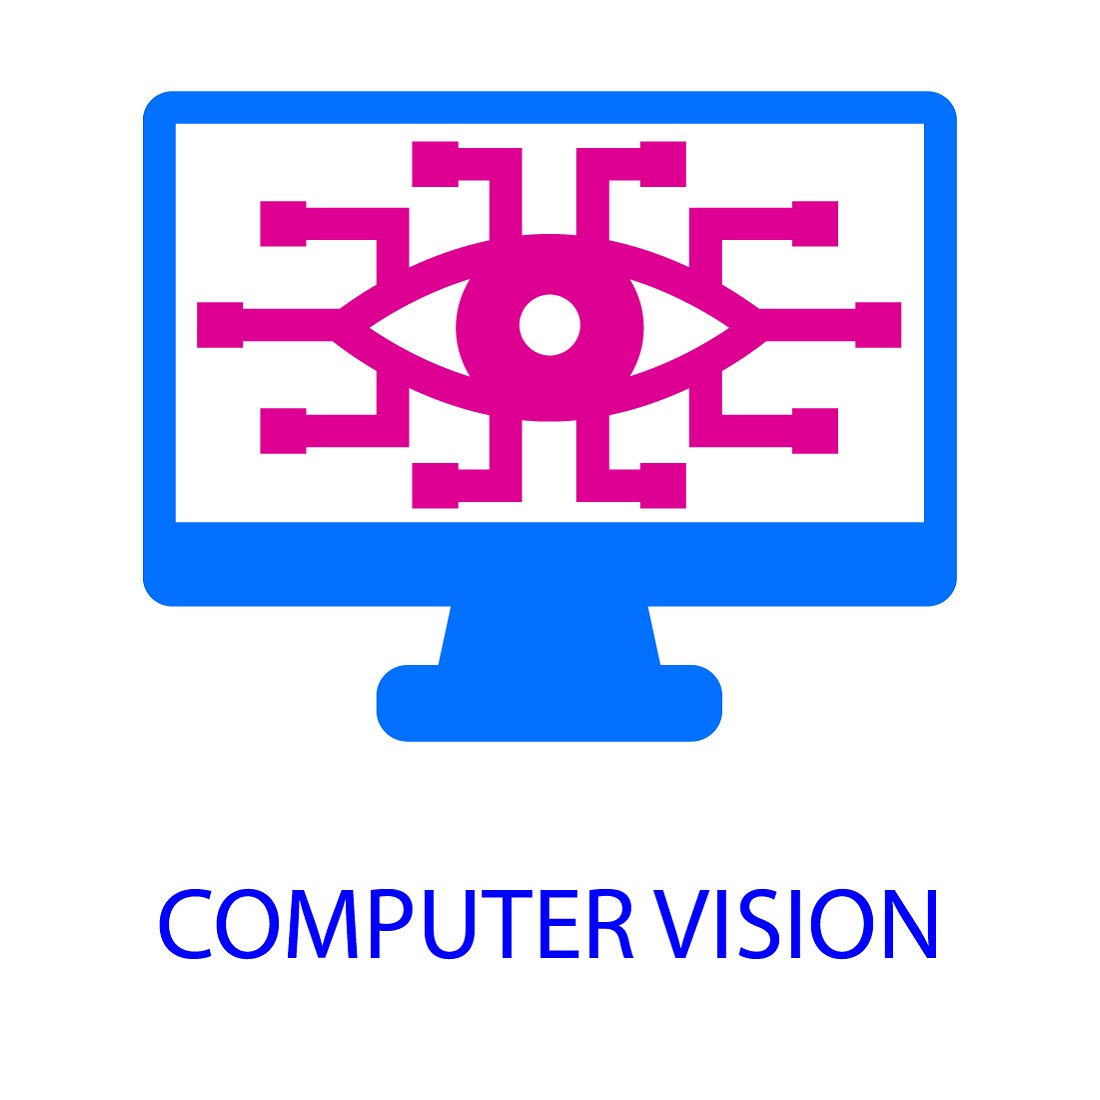 mordan computer science icon set editabol and ricbale 10 35